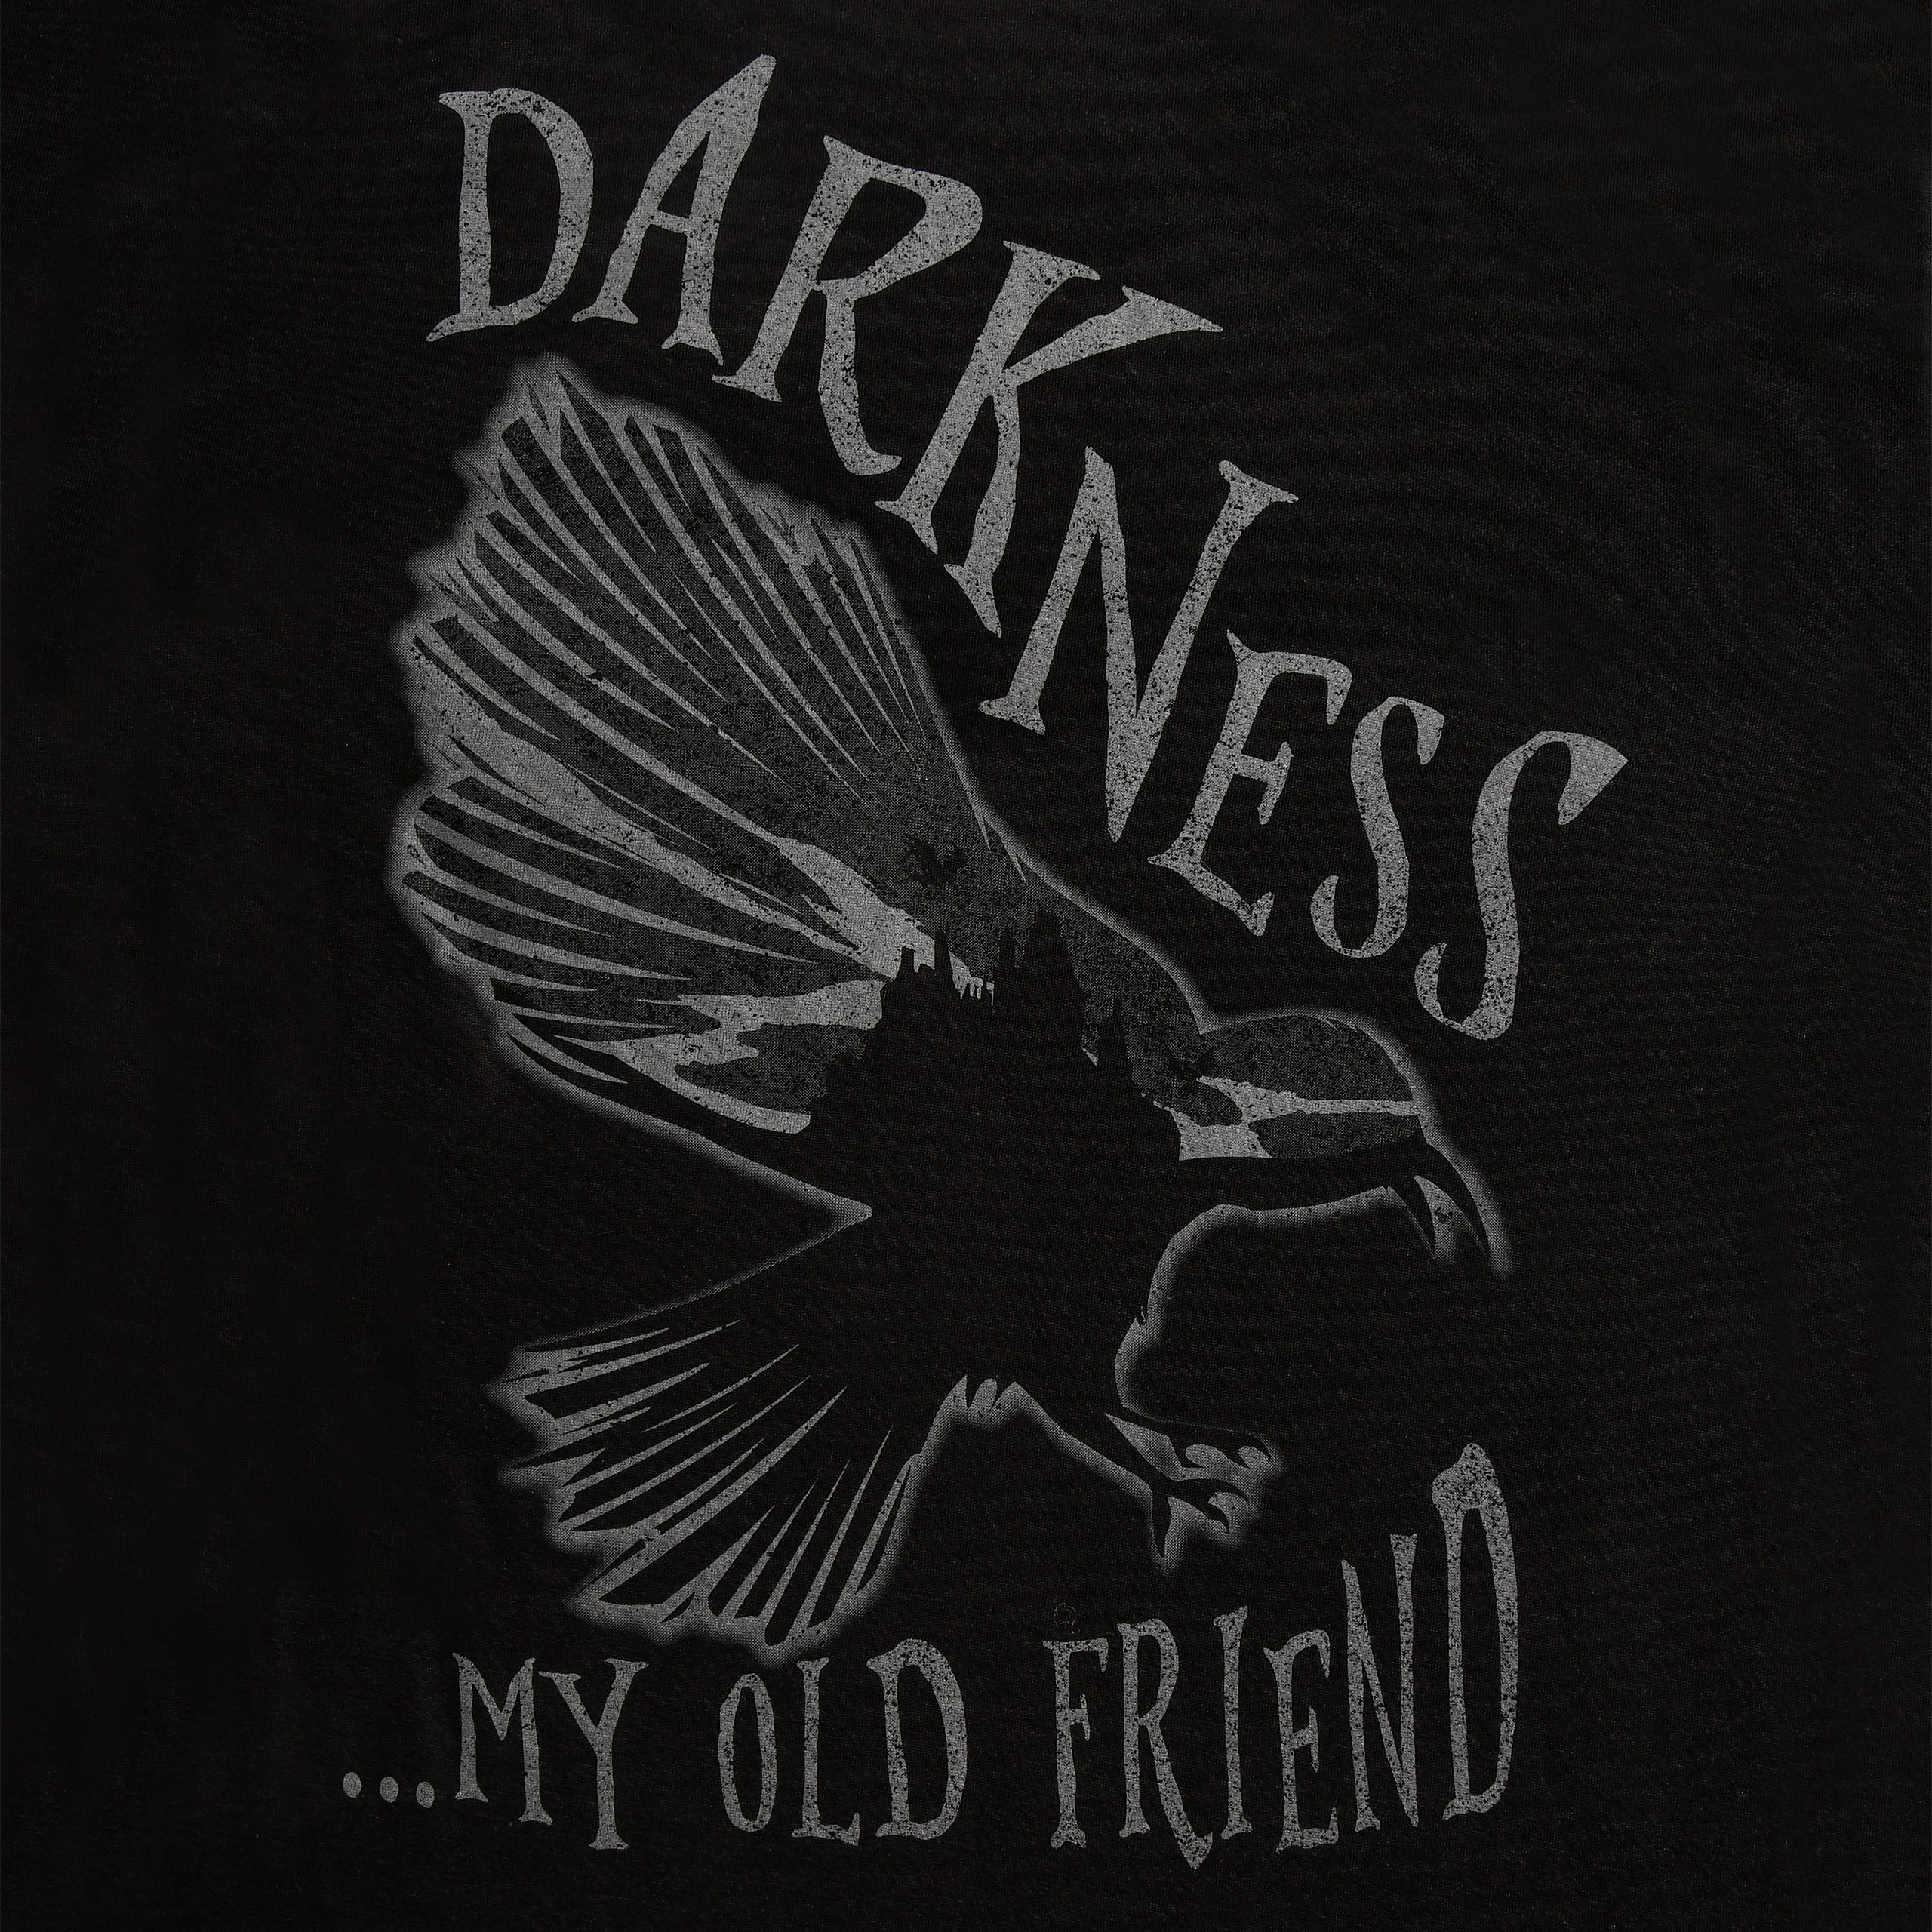 Wednesday - Darkness Minidress